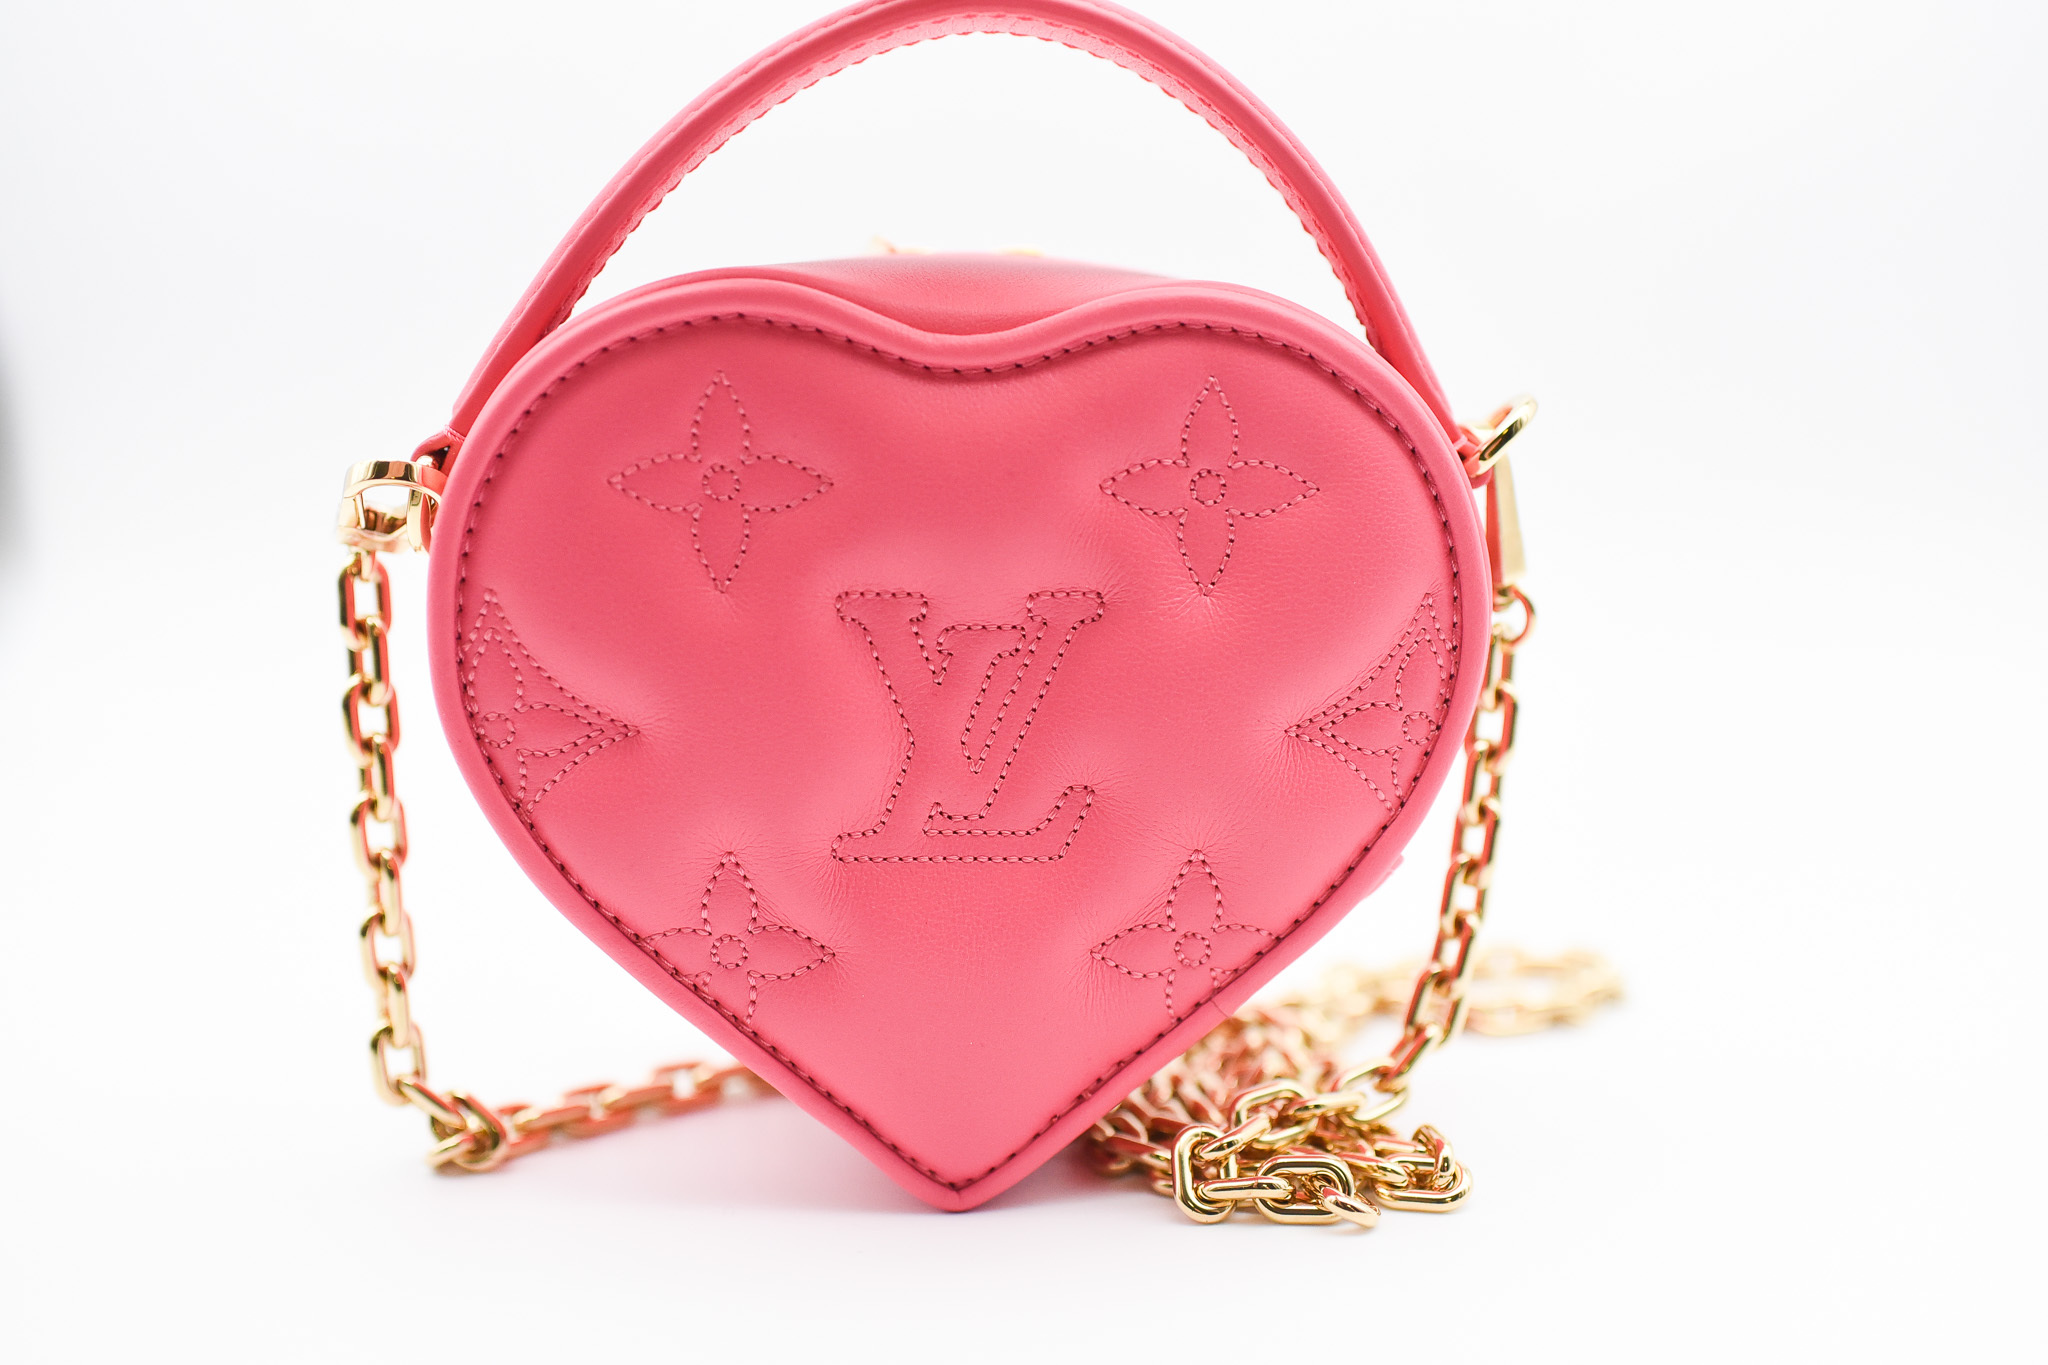 MANIFESTO - FOR THE LOVESICK GIRLS: Louis Vuitton's Pop My Heart Pouch